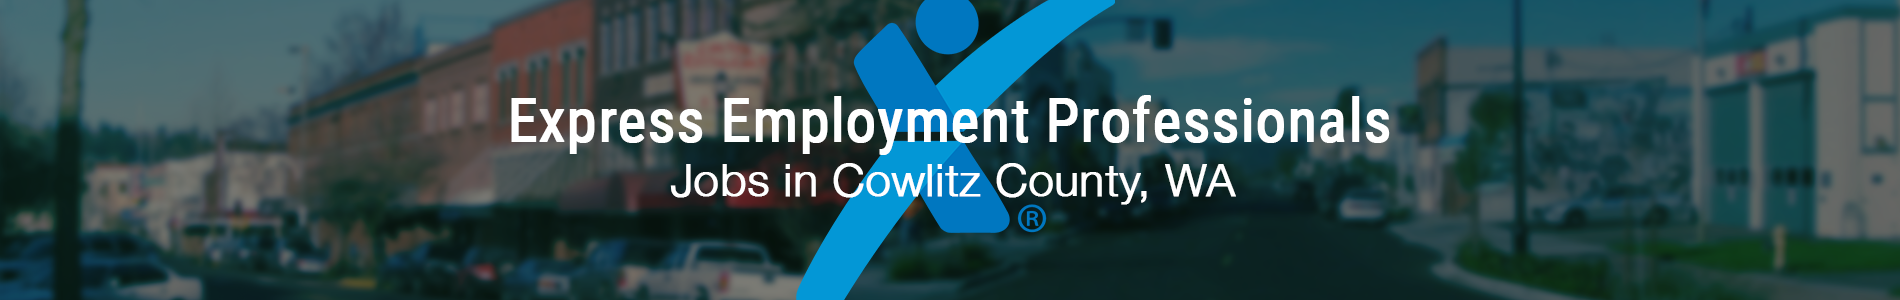 Jobs in Longview, WA and Woodland, WA - Apply today!